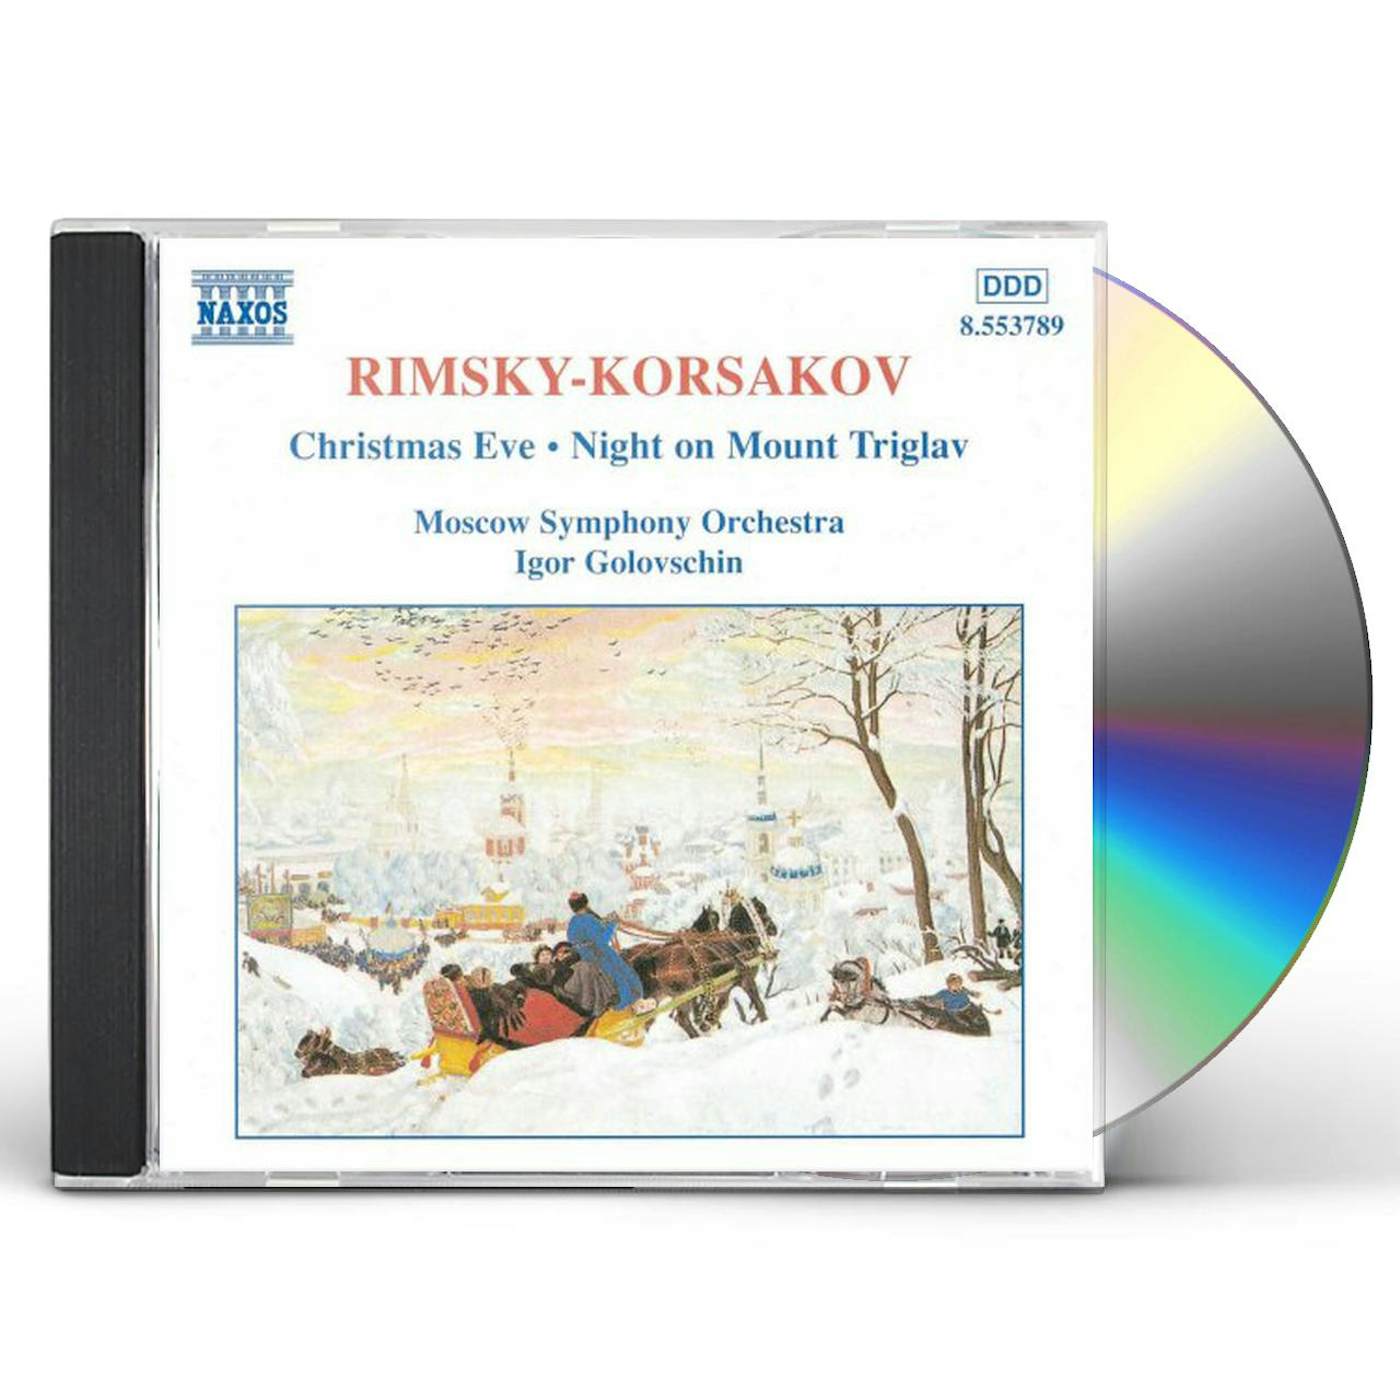 Rimsky-Korsakov CHRISTMAS EVE CD